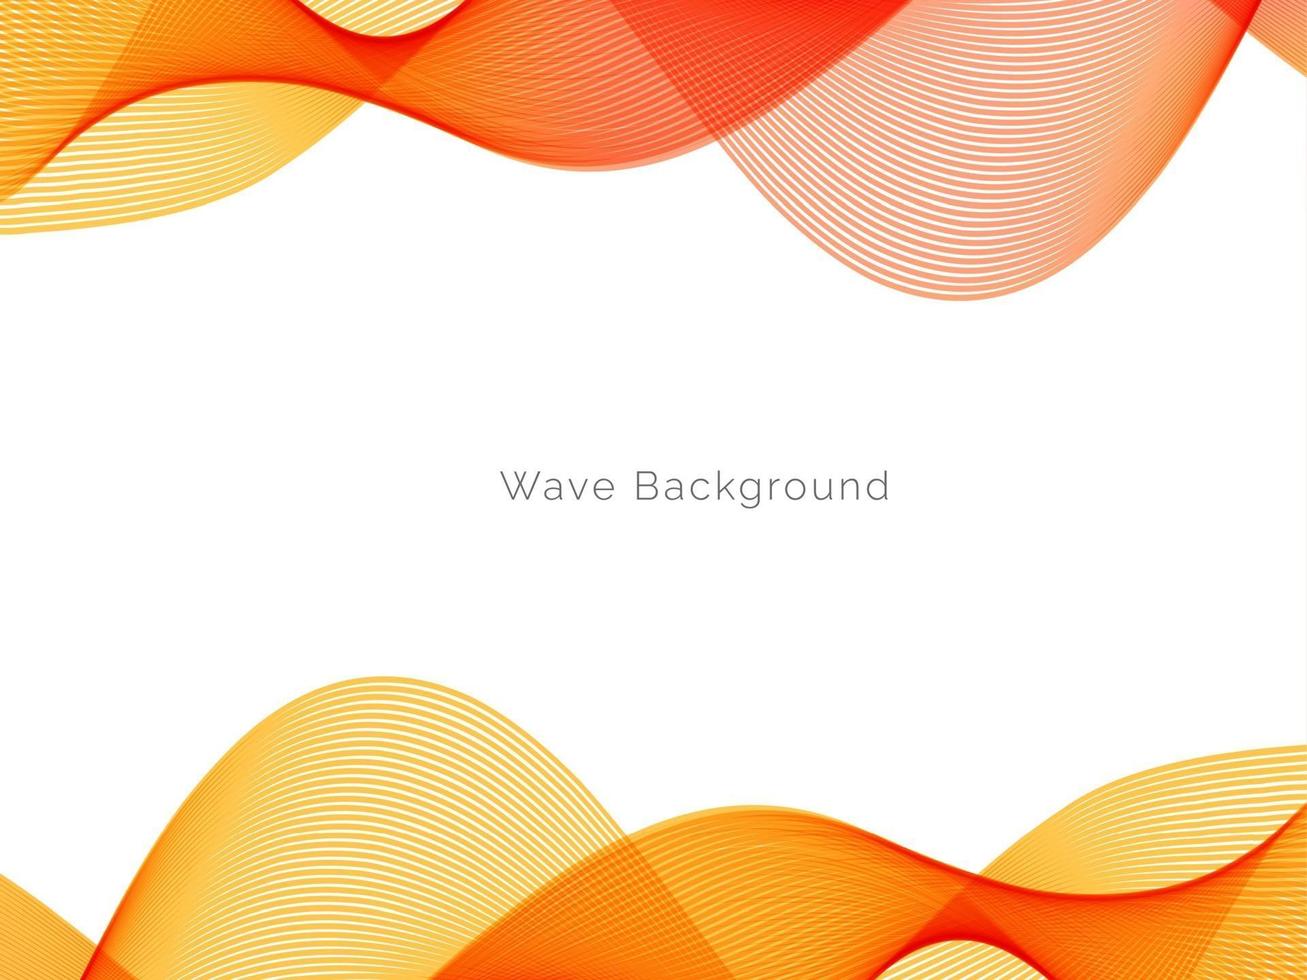 dekorativ design modernt mönster med elegant slät orange vågbakgrund vektor